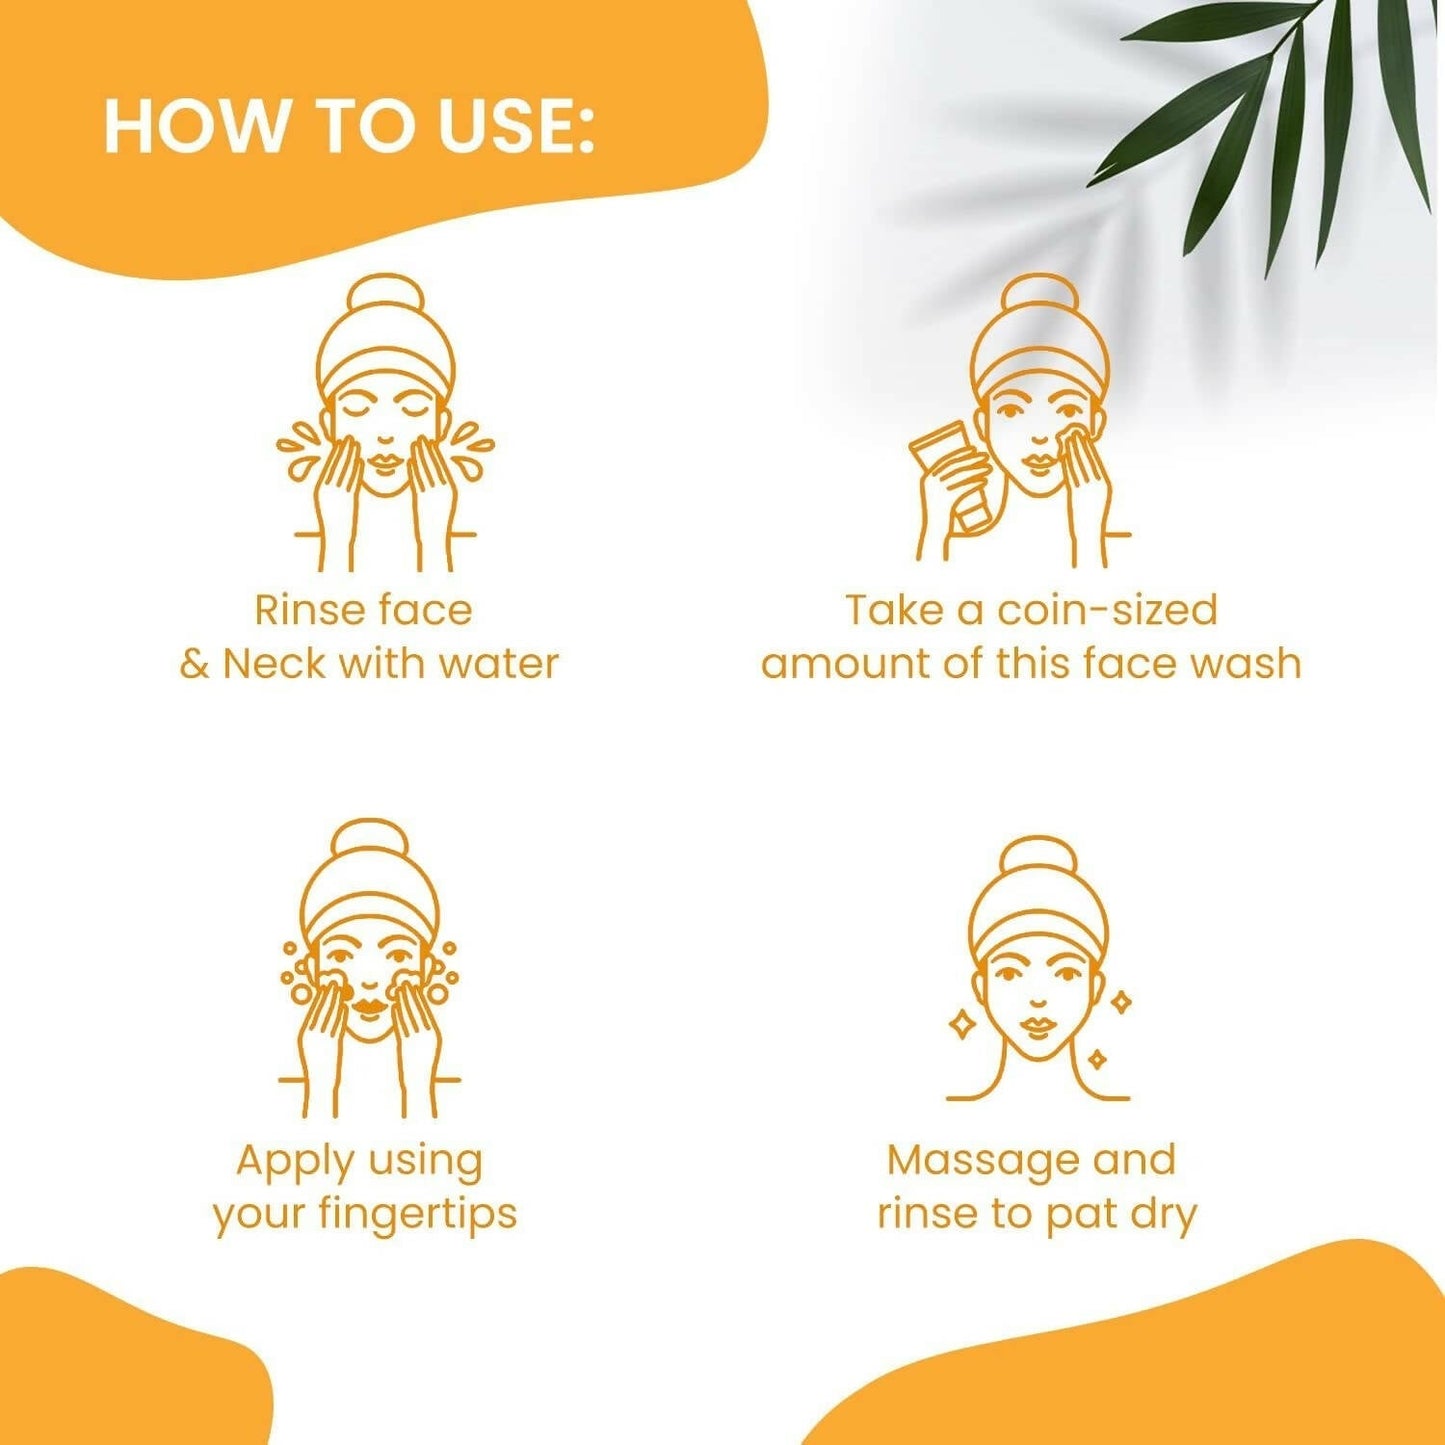 NutriGlow NATURAL'S Advanced Pro Formula Papaya for Skin Brightening & Tan Removal Face Wash